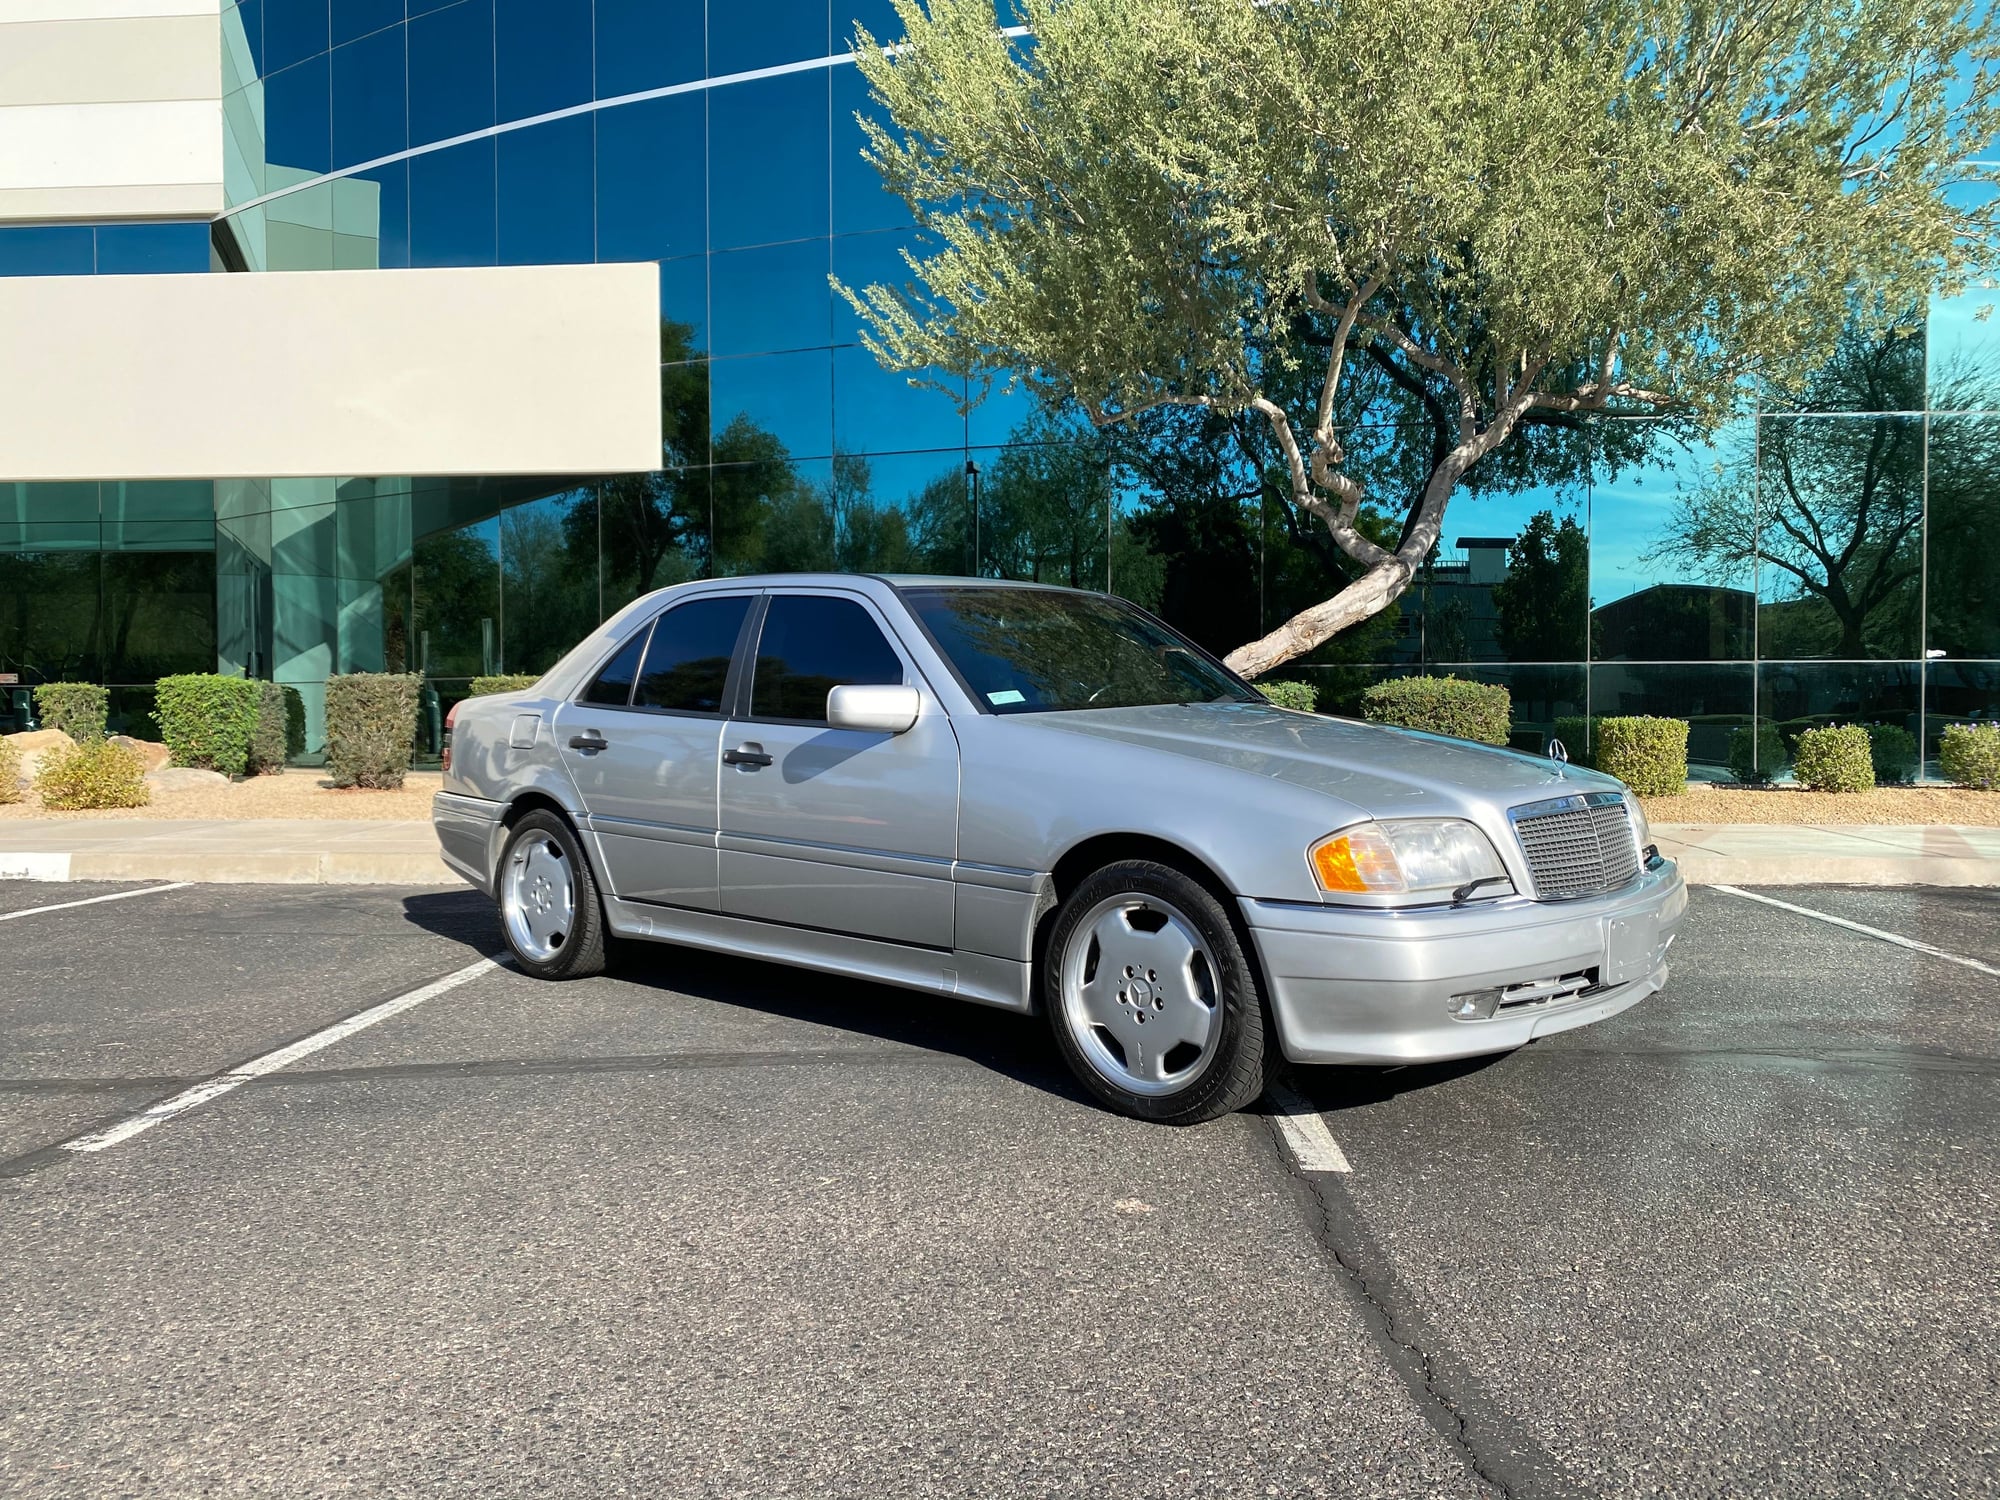 1995 Mercedes-Benz C36 AMG - FS: 1995 Mercedes-Benz C36 AMG - Used - VIN WDBHM36E5SF254054 - 58,000 Miles - 6 cyl - 2WD - Automatic - Sedan - Silver - Scottsdale, AZ 85255, United States